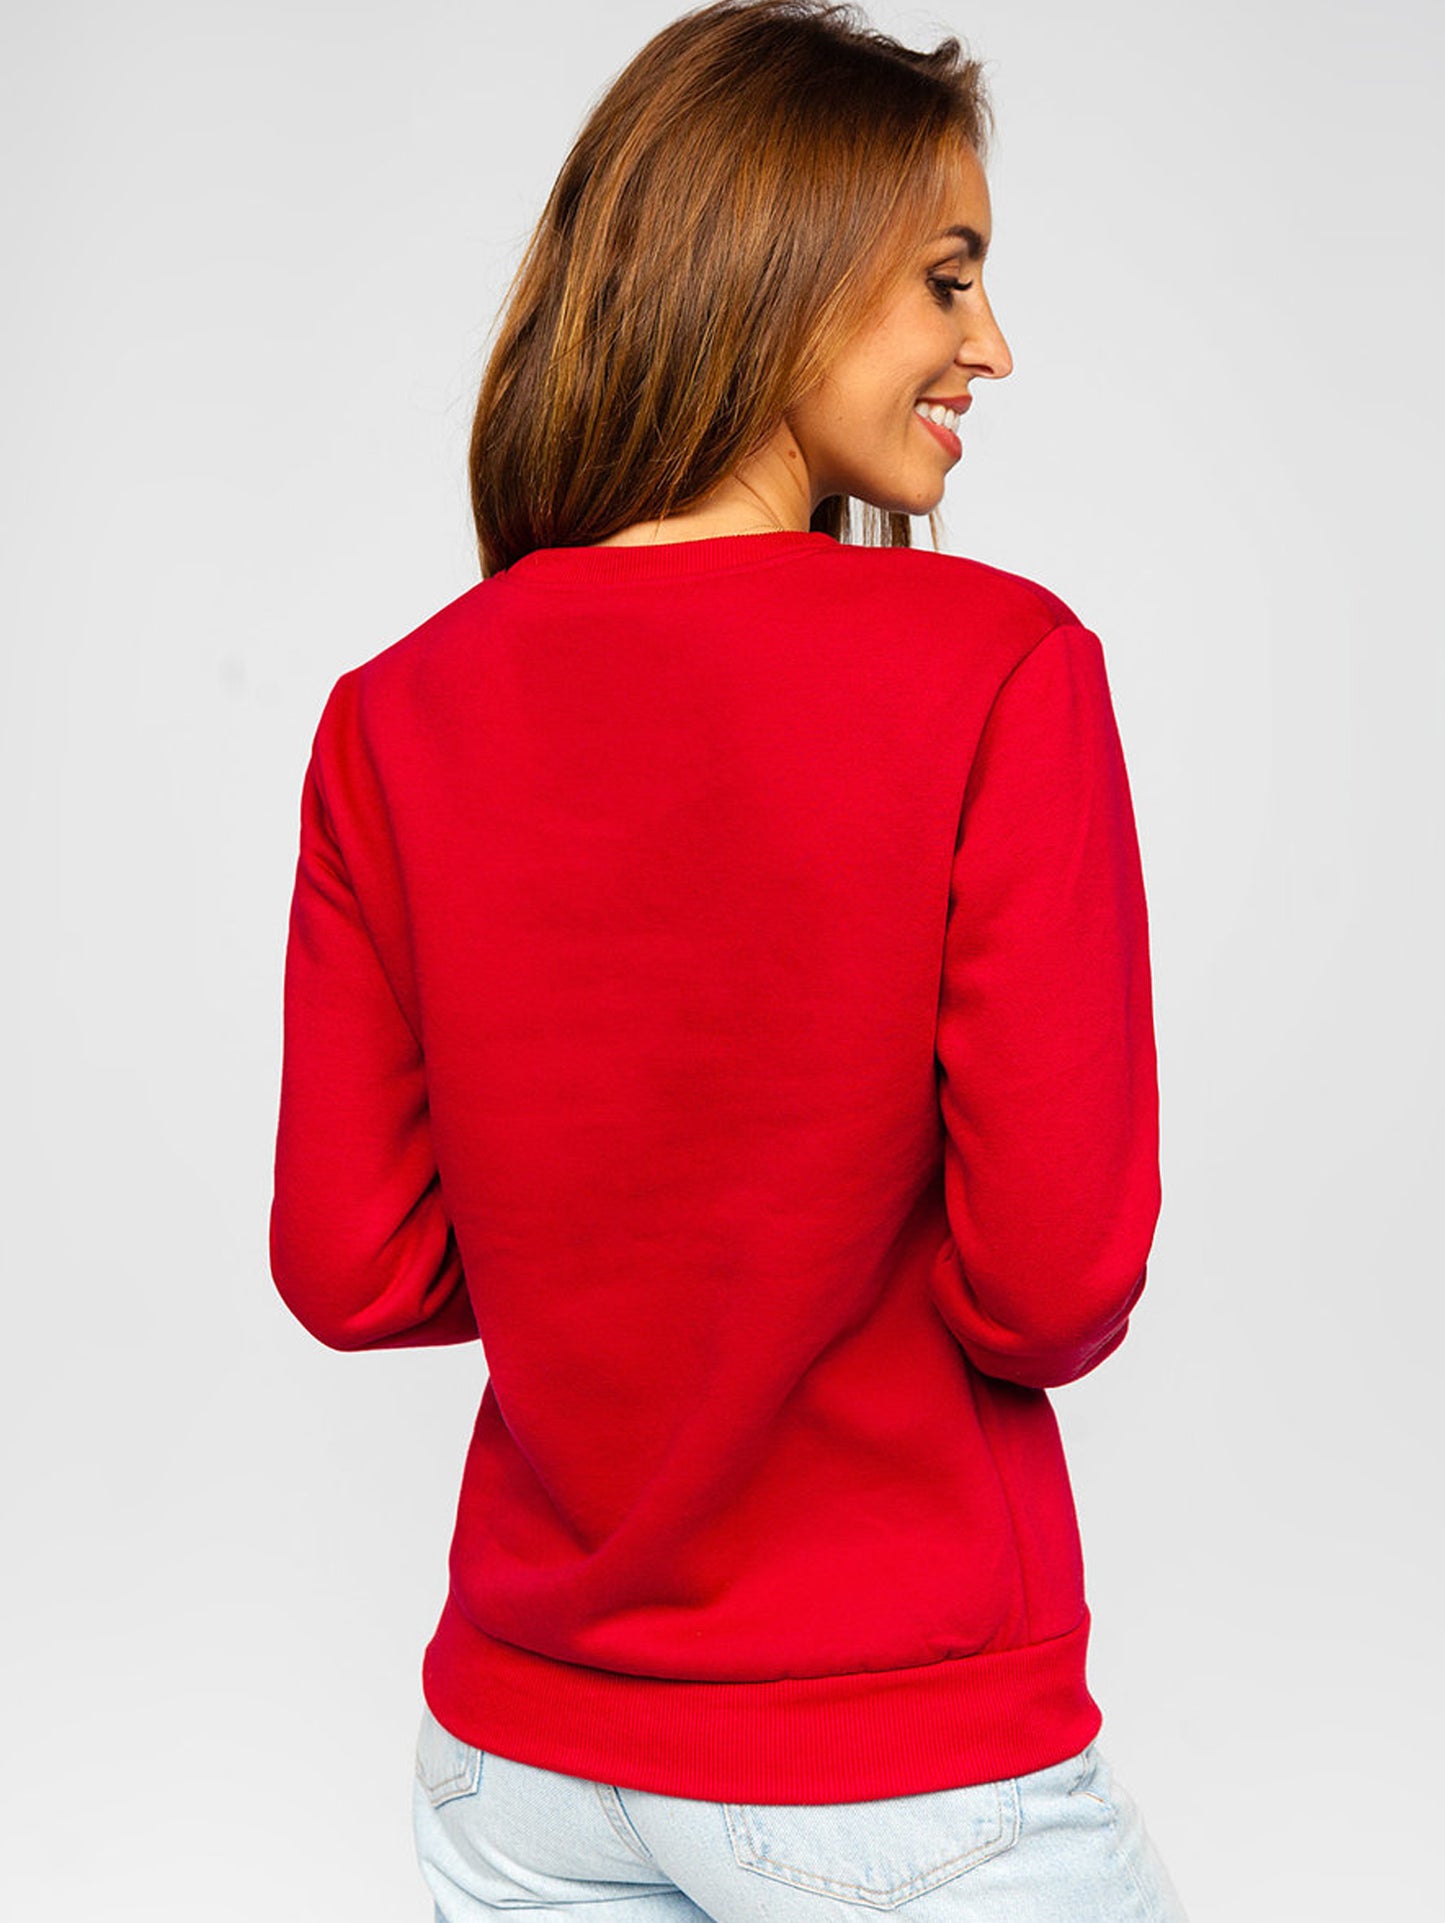 Women's Basic Maroon Sweatshirt